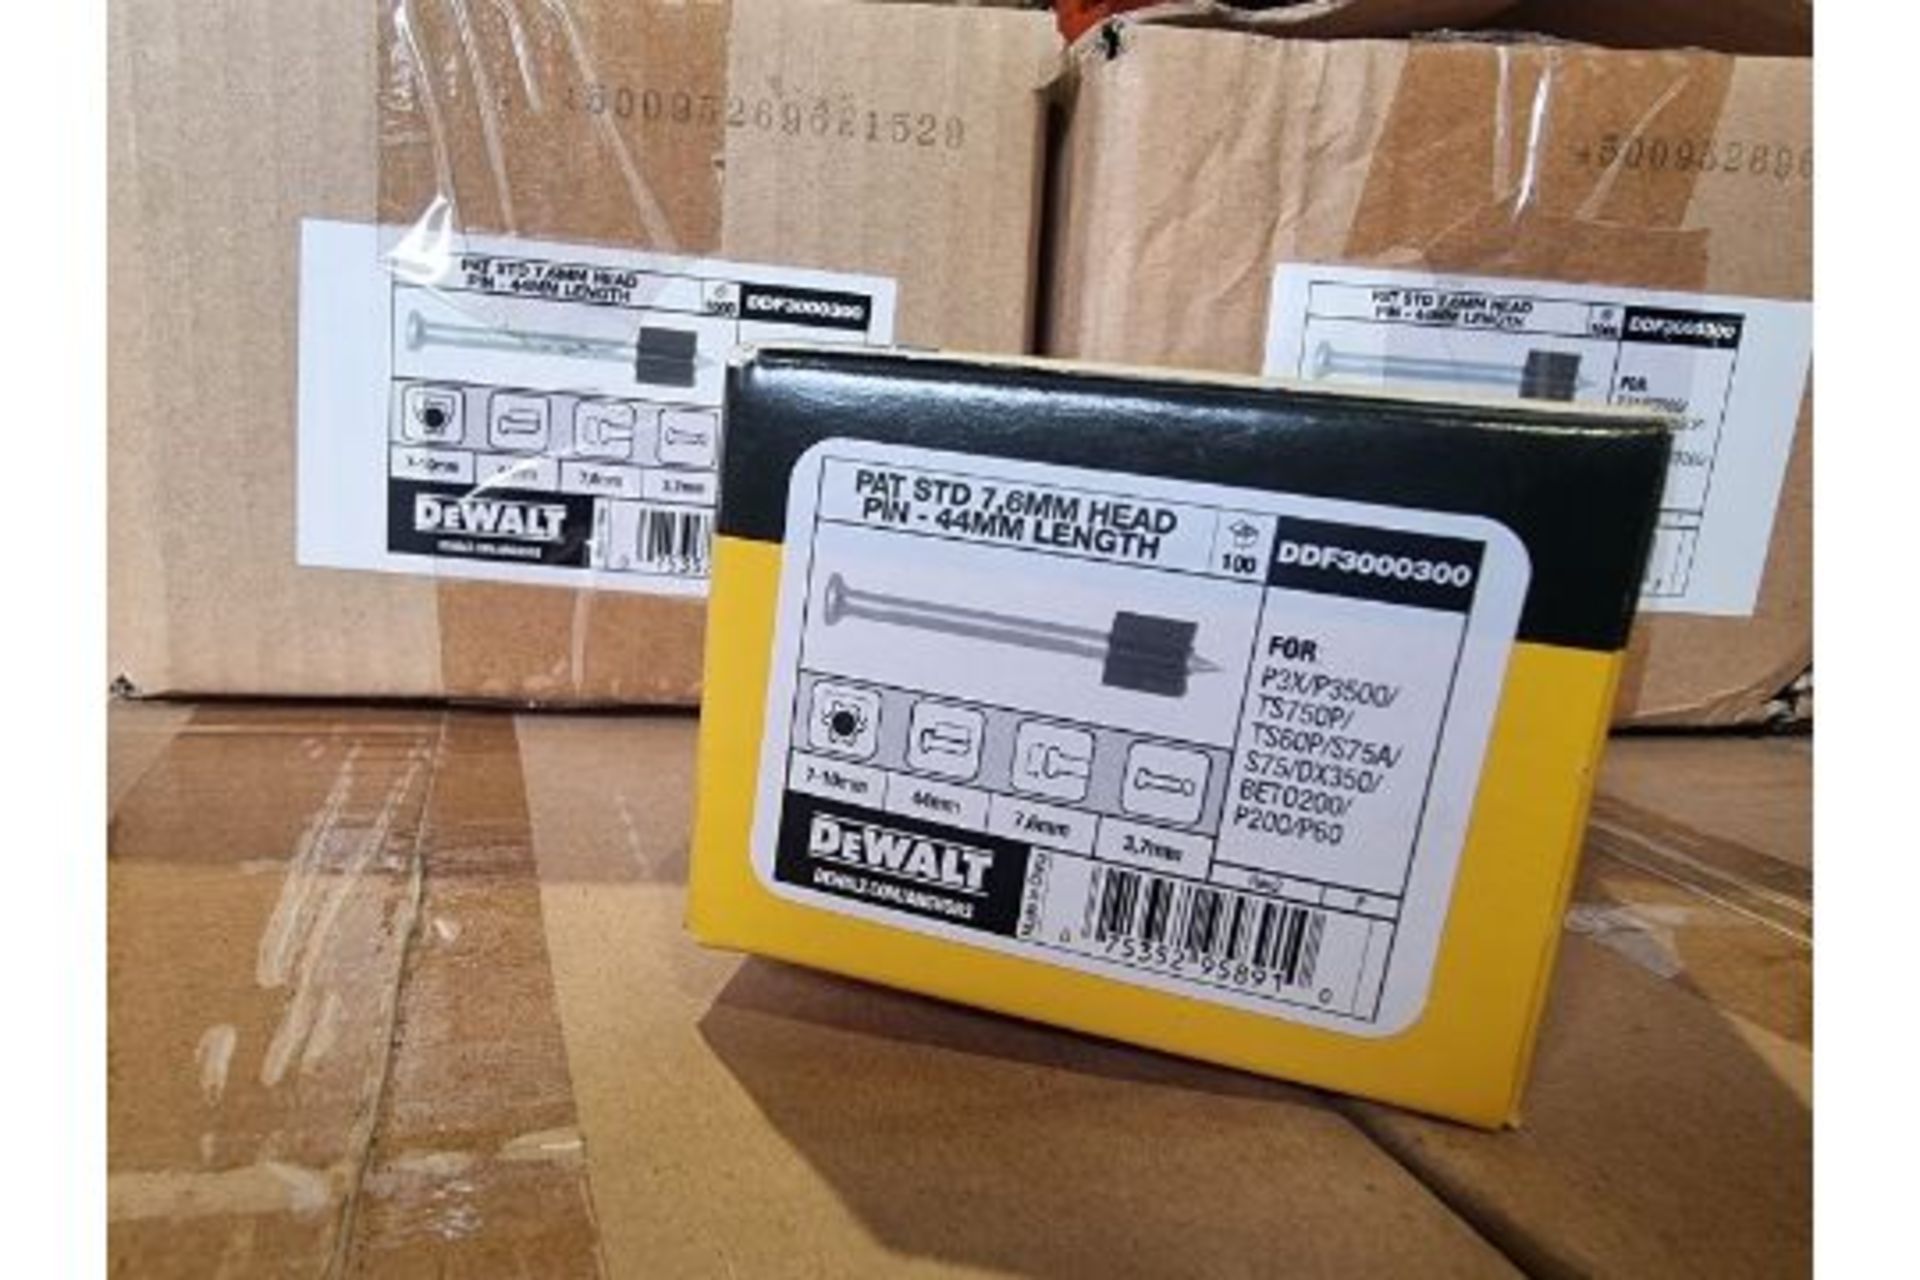 Trade Lot 60 x New Boxes of 100 Dewalt PAT Std 7,6mm Head Pin - 44mm Length DDF3000300Universal